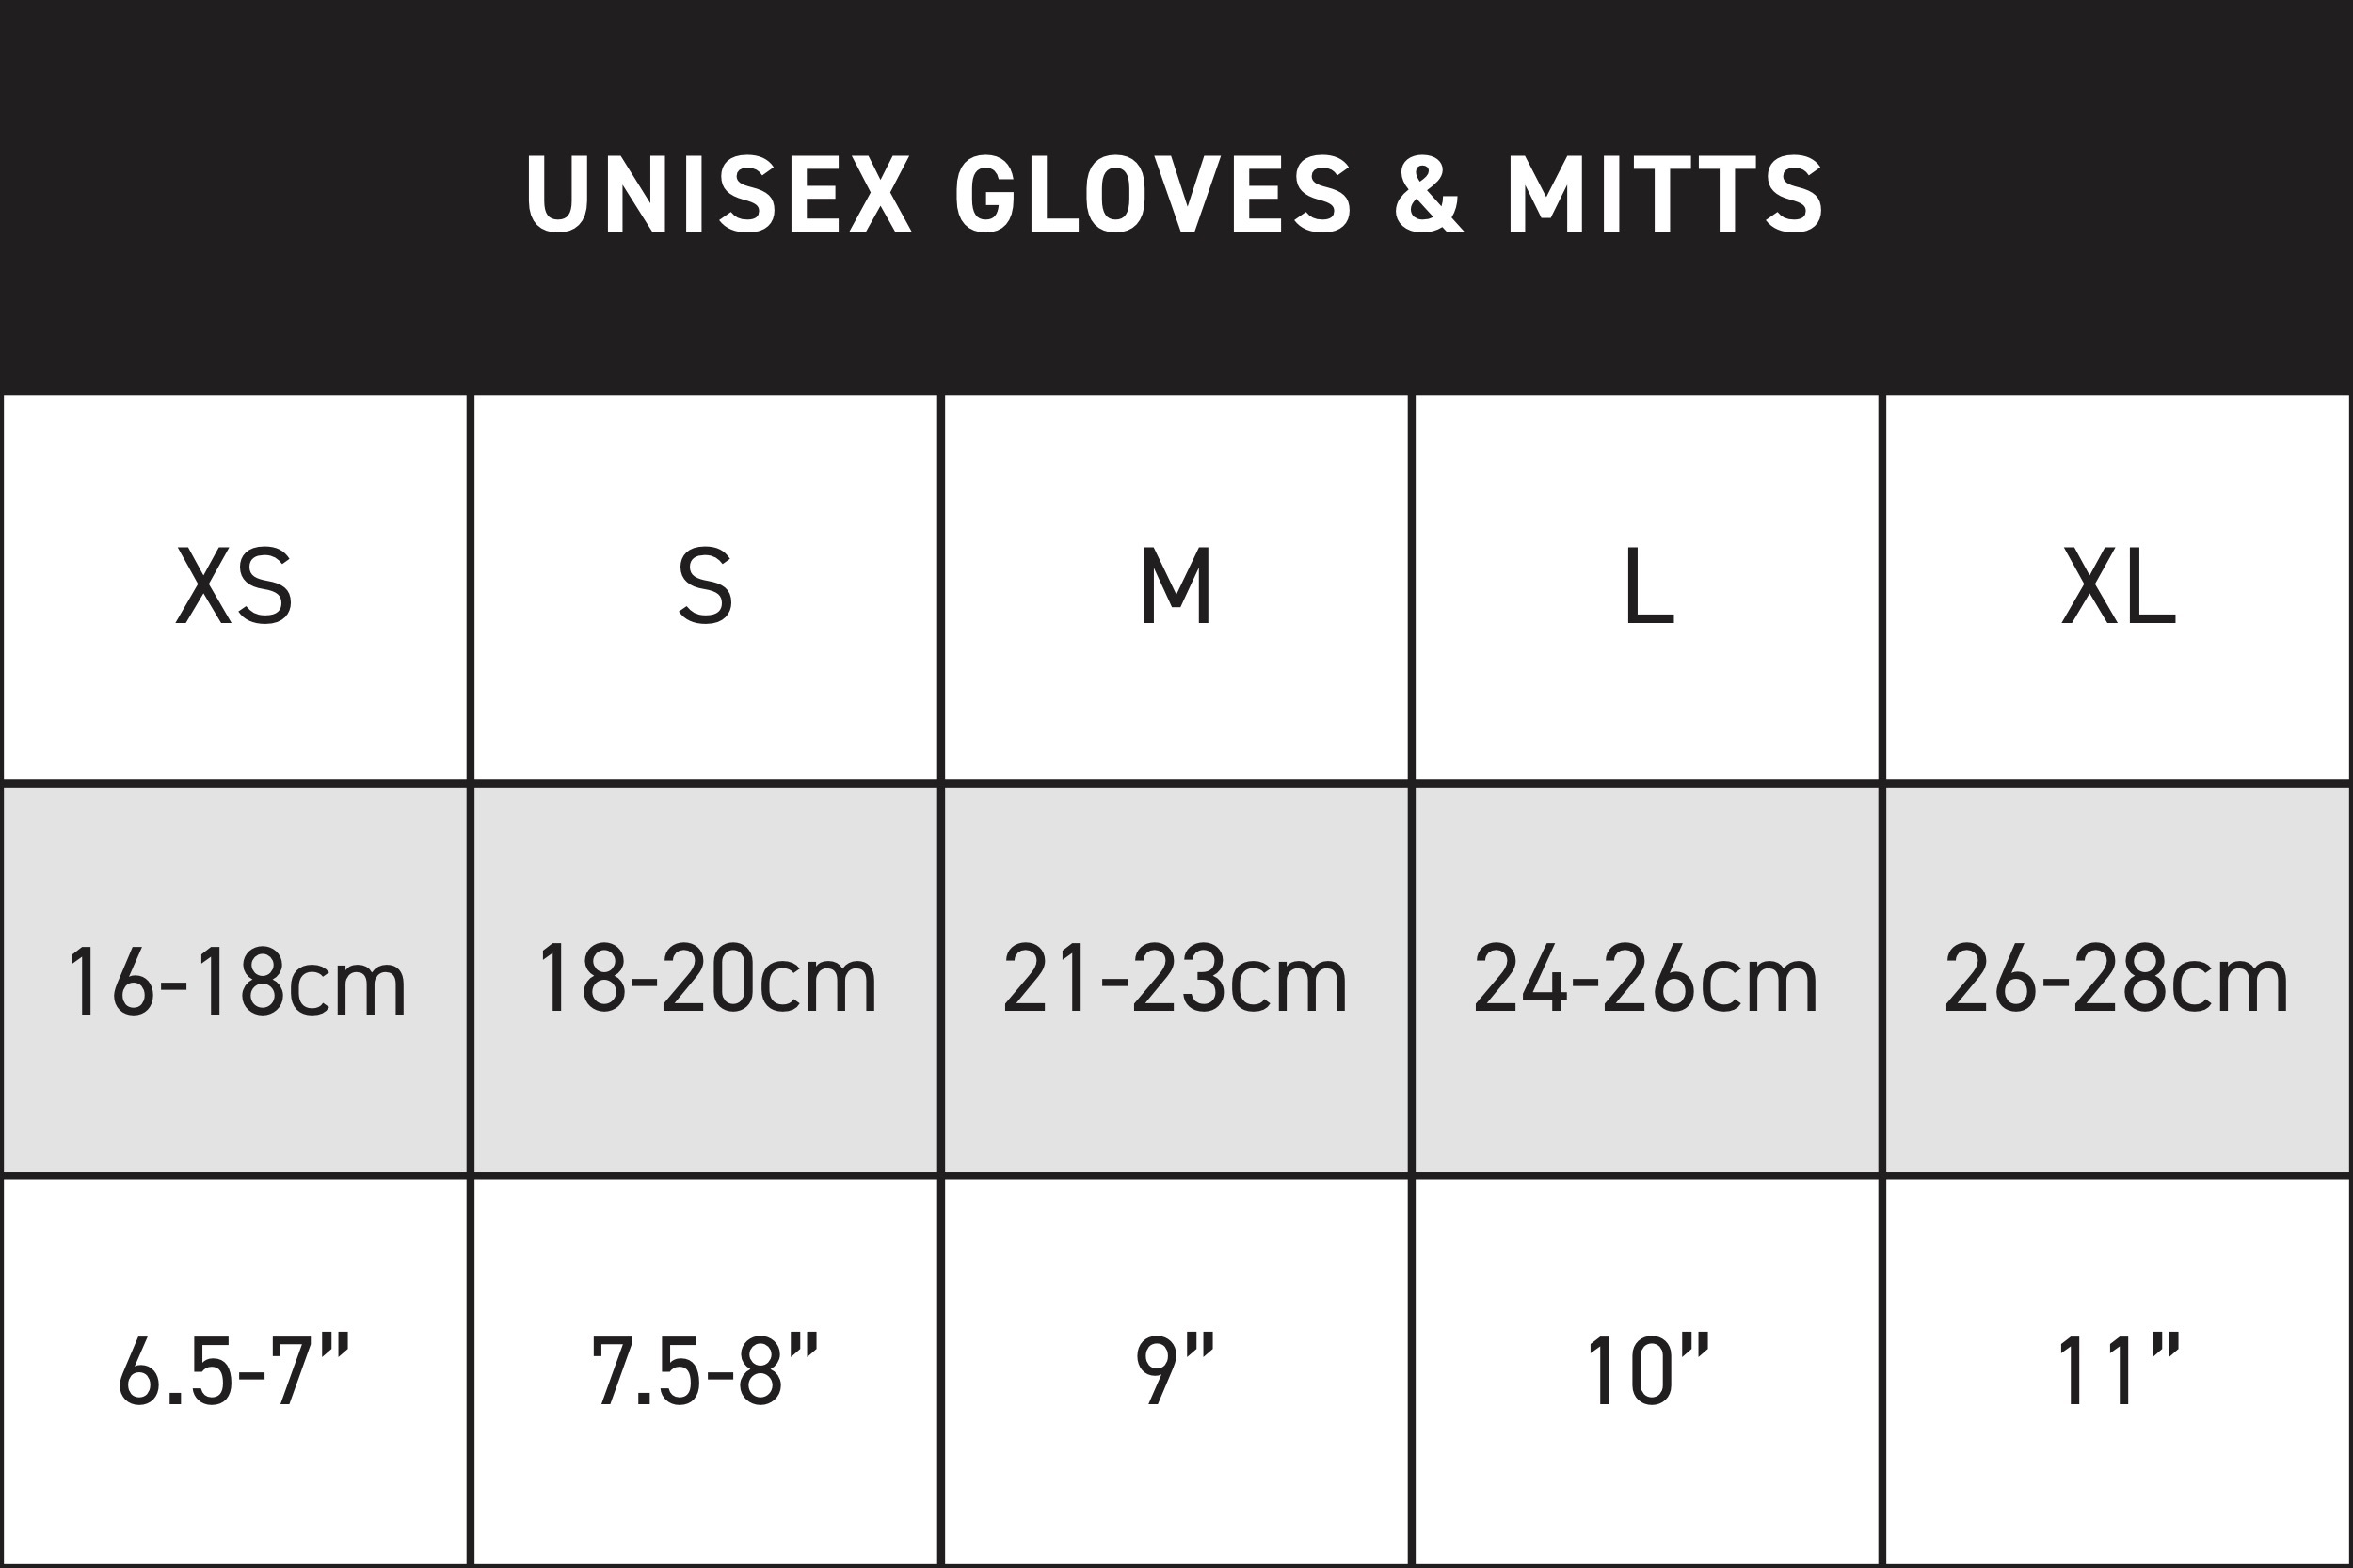 UNISEX GLOVES & MITTS